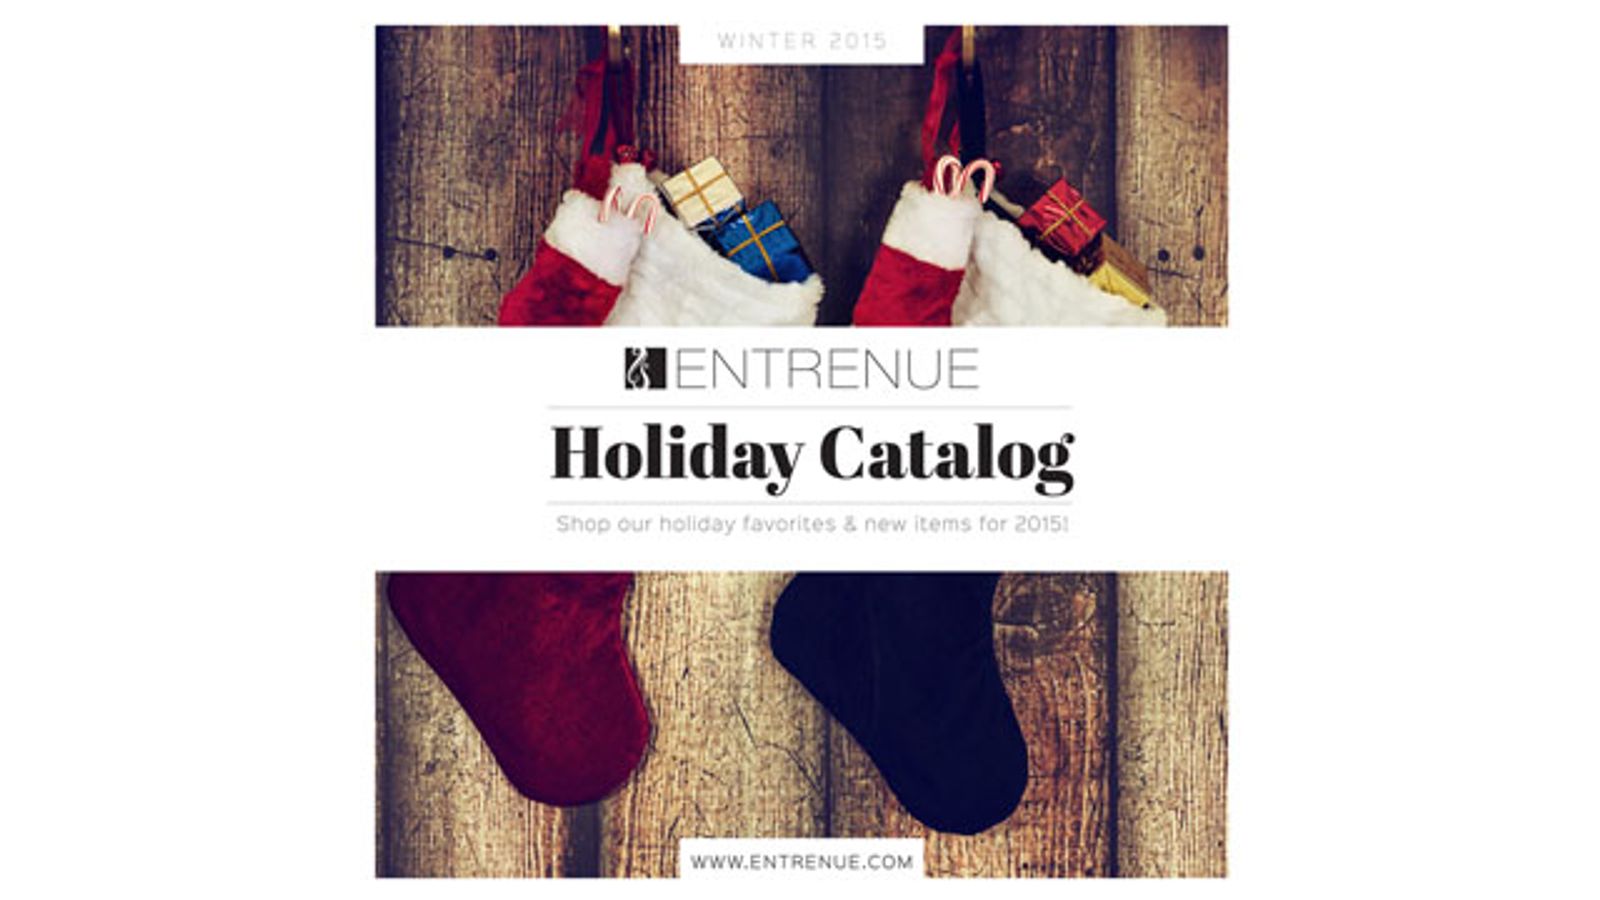 Entrenue Announces Online Release Of Joyful Holidays Catalog Supplement